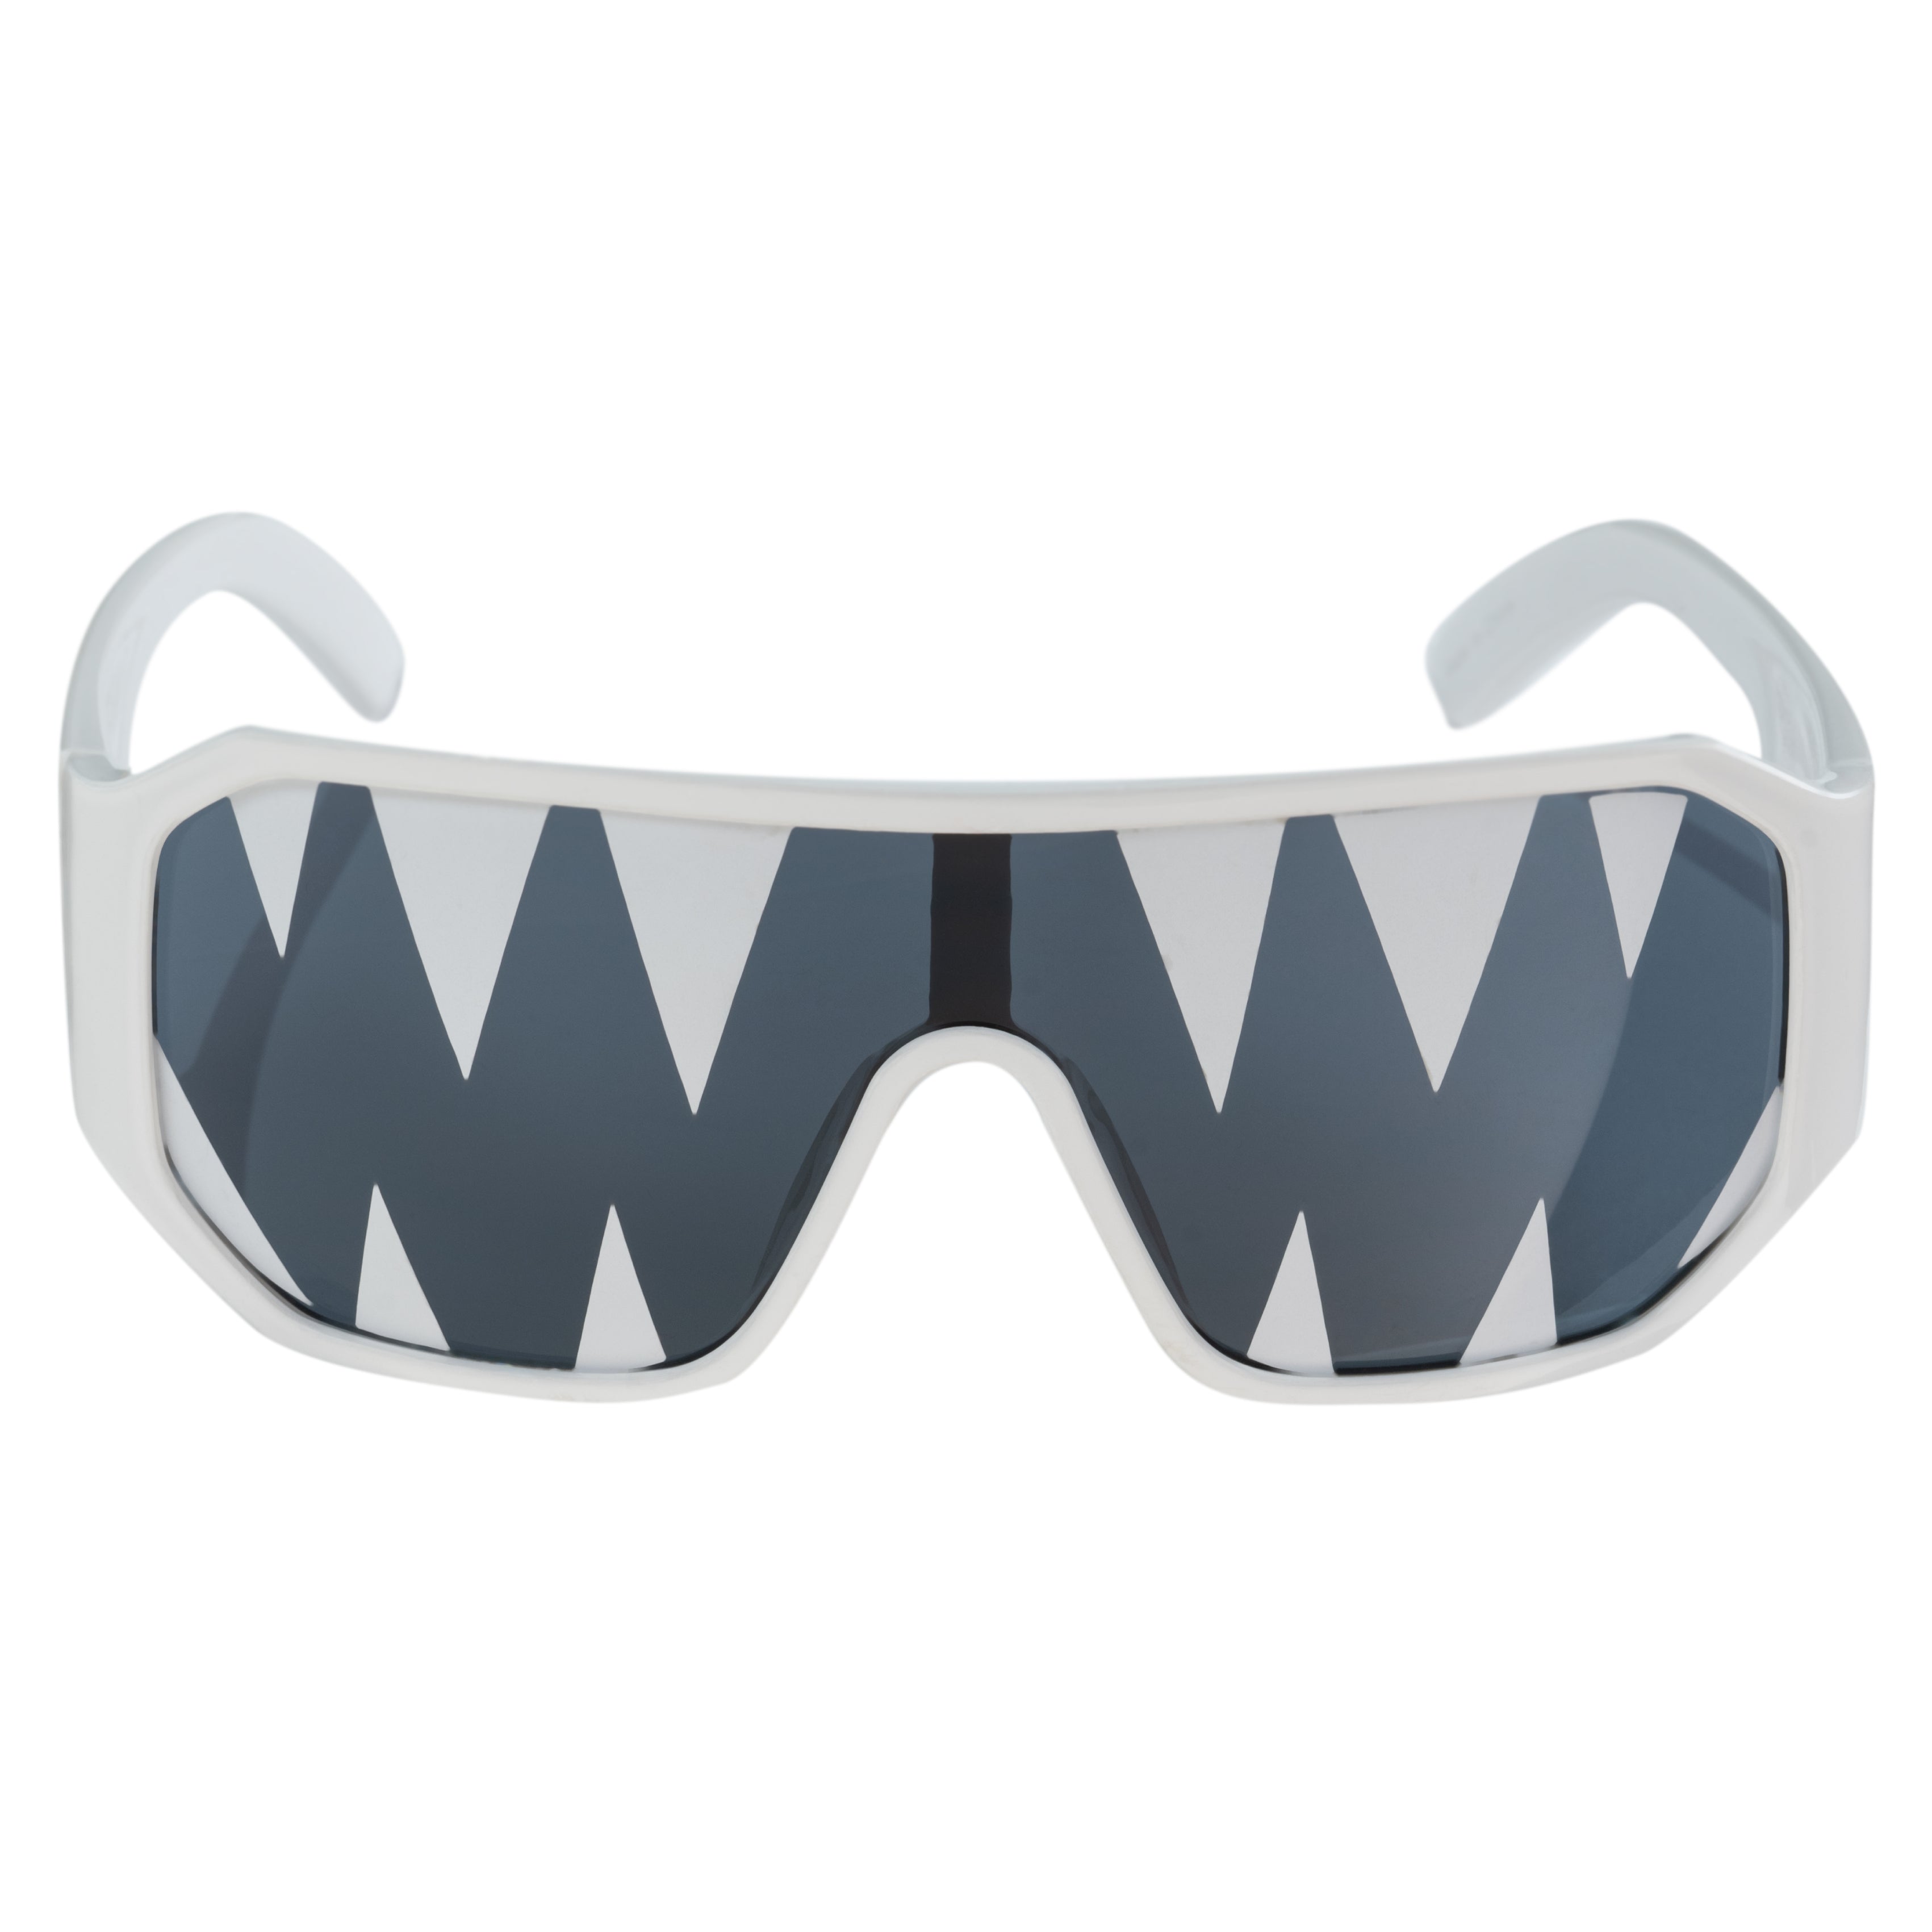 Machoman Randy Savage Costume Accessory Cosplay Sunglasses White